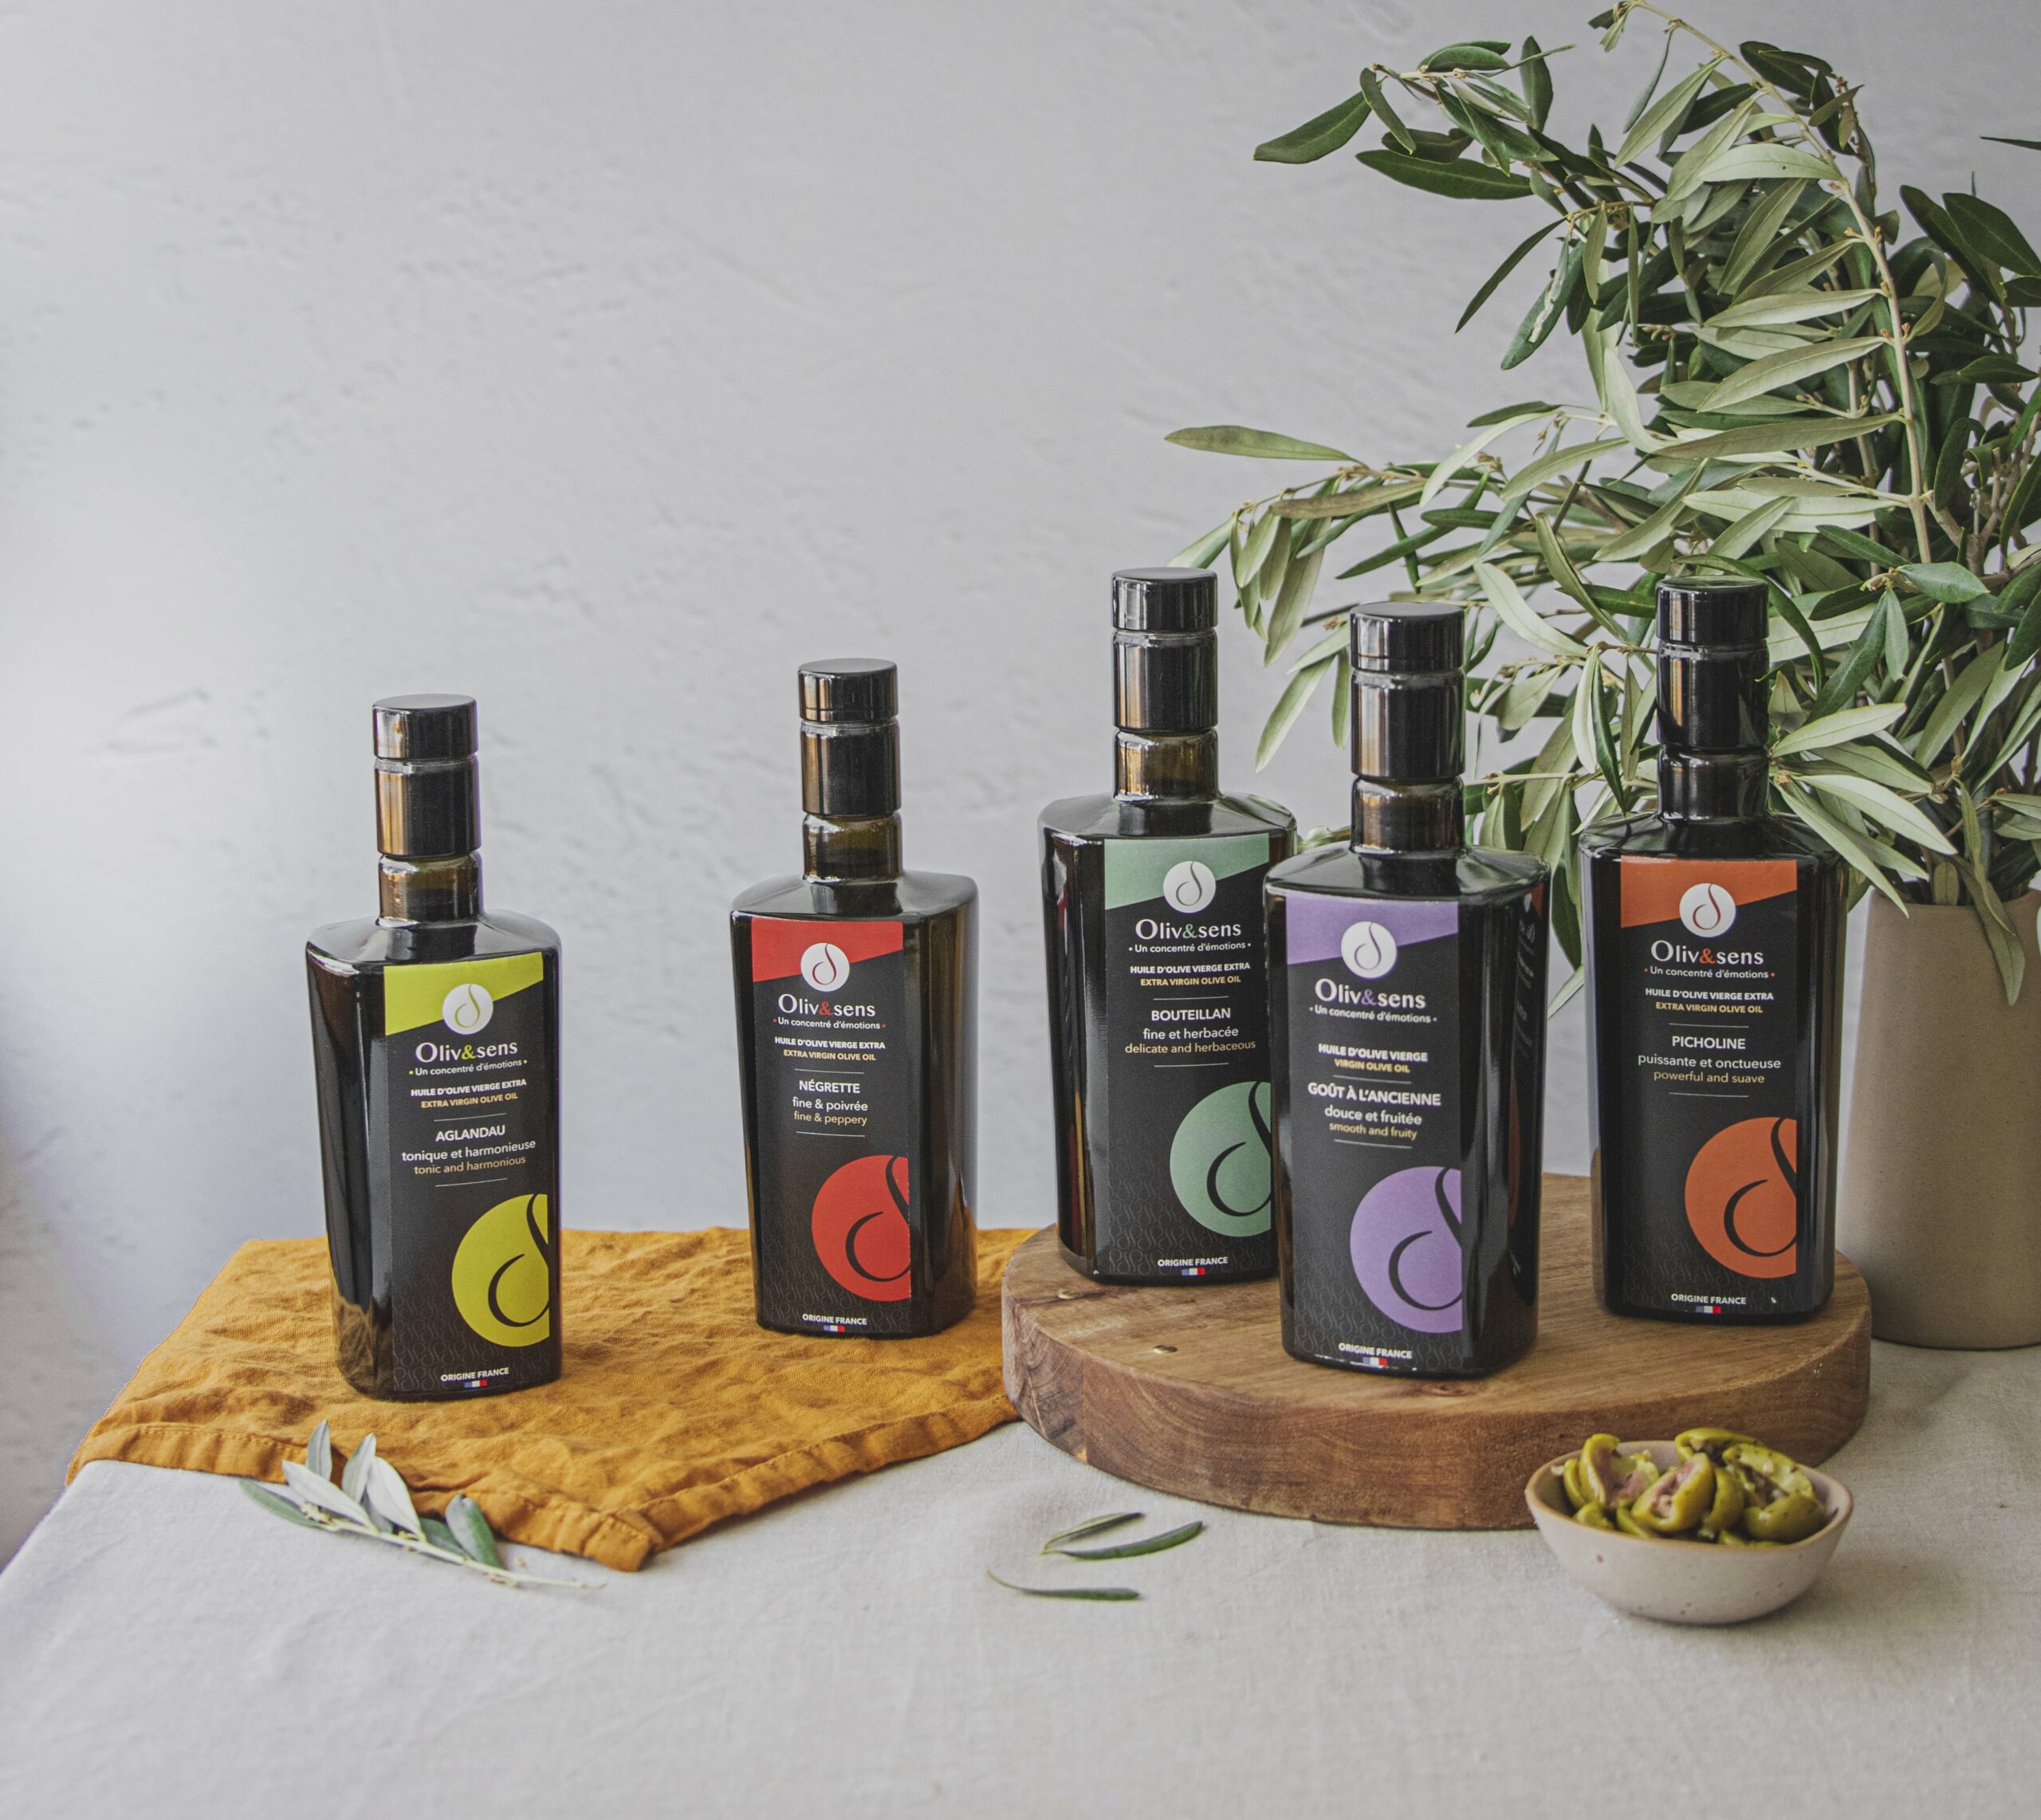 Oliv & sens olive oil range